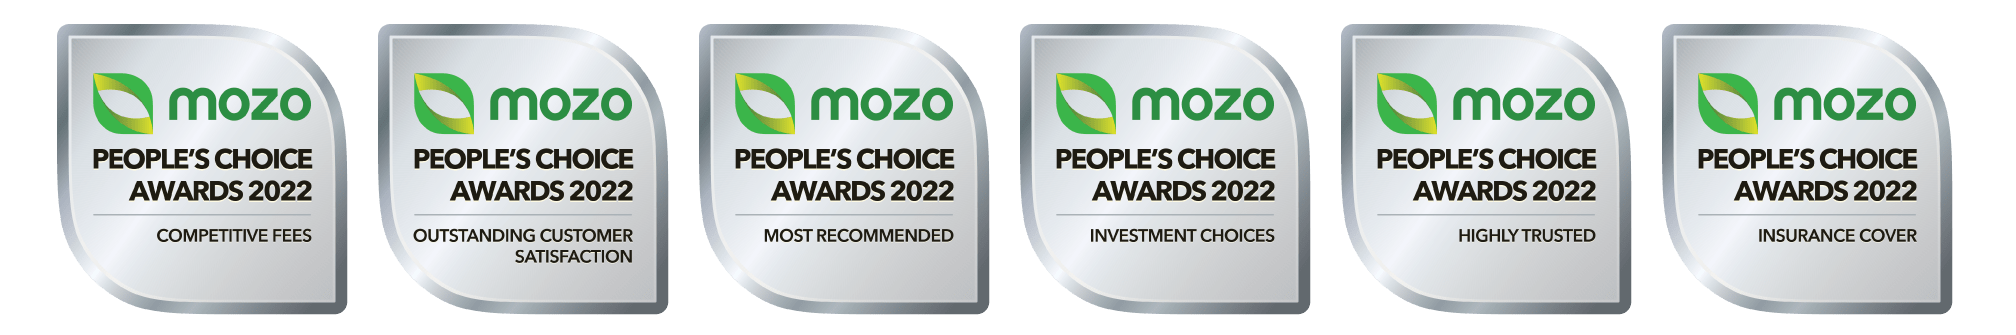 Mozo Award logos